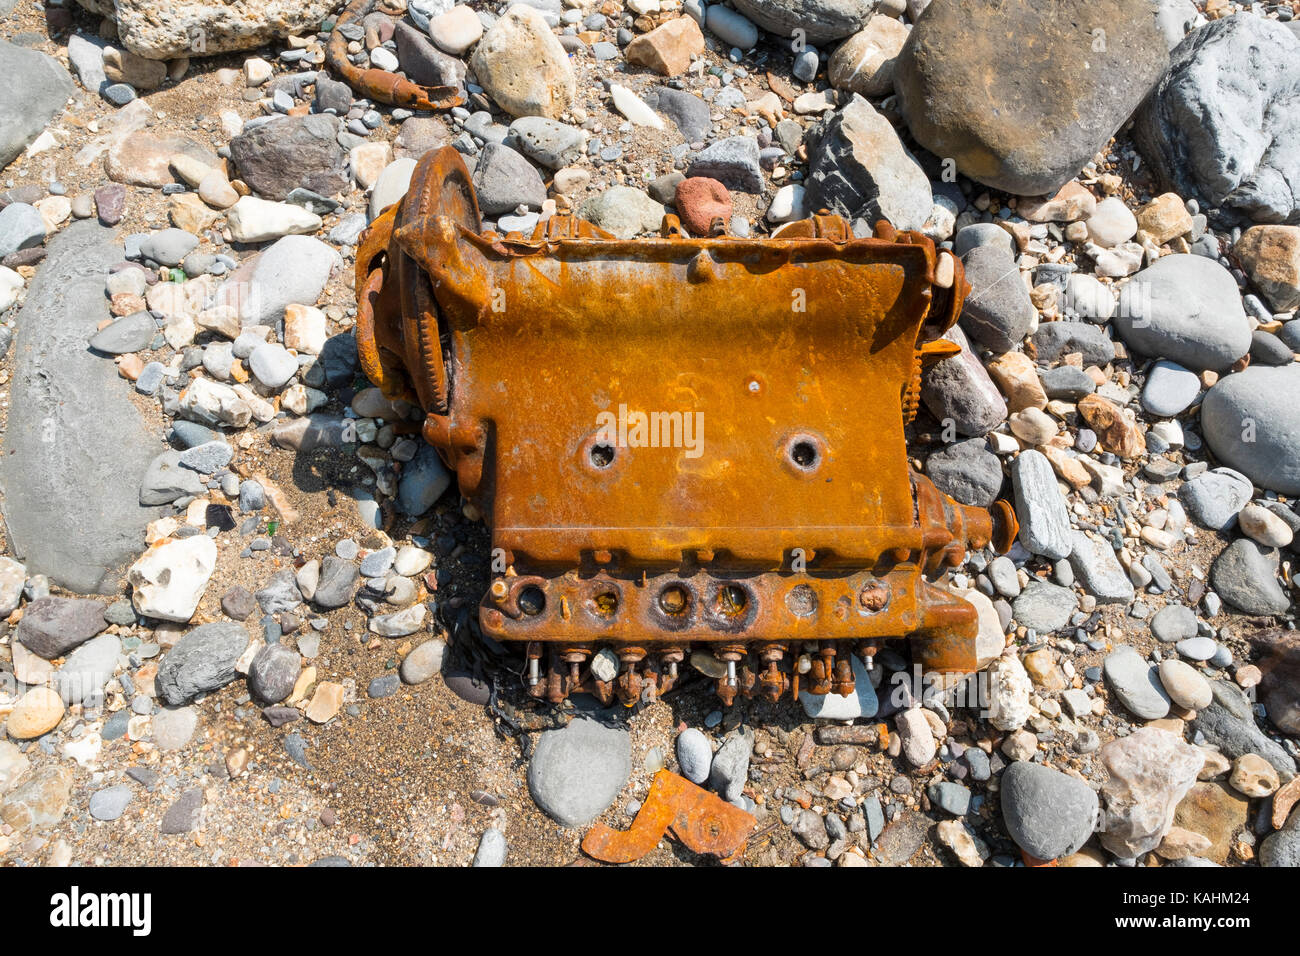 A rusty car engine on the beach at Lyme Regis on the Jurassic Coast, Dorset, England, UK. Stock Photo